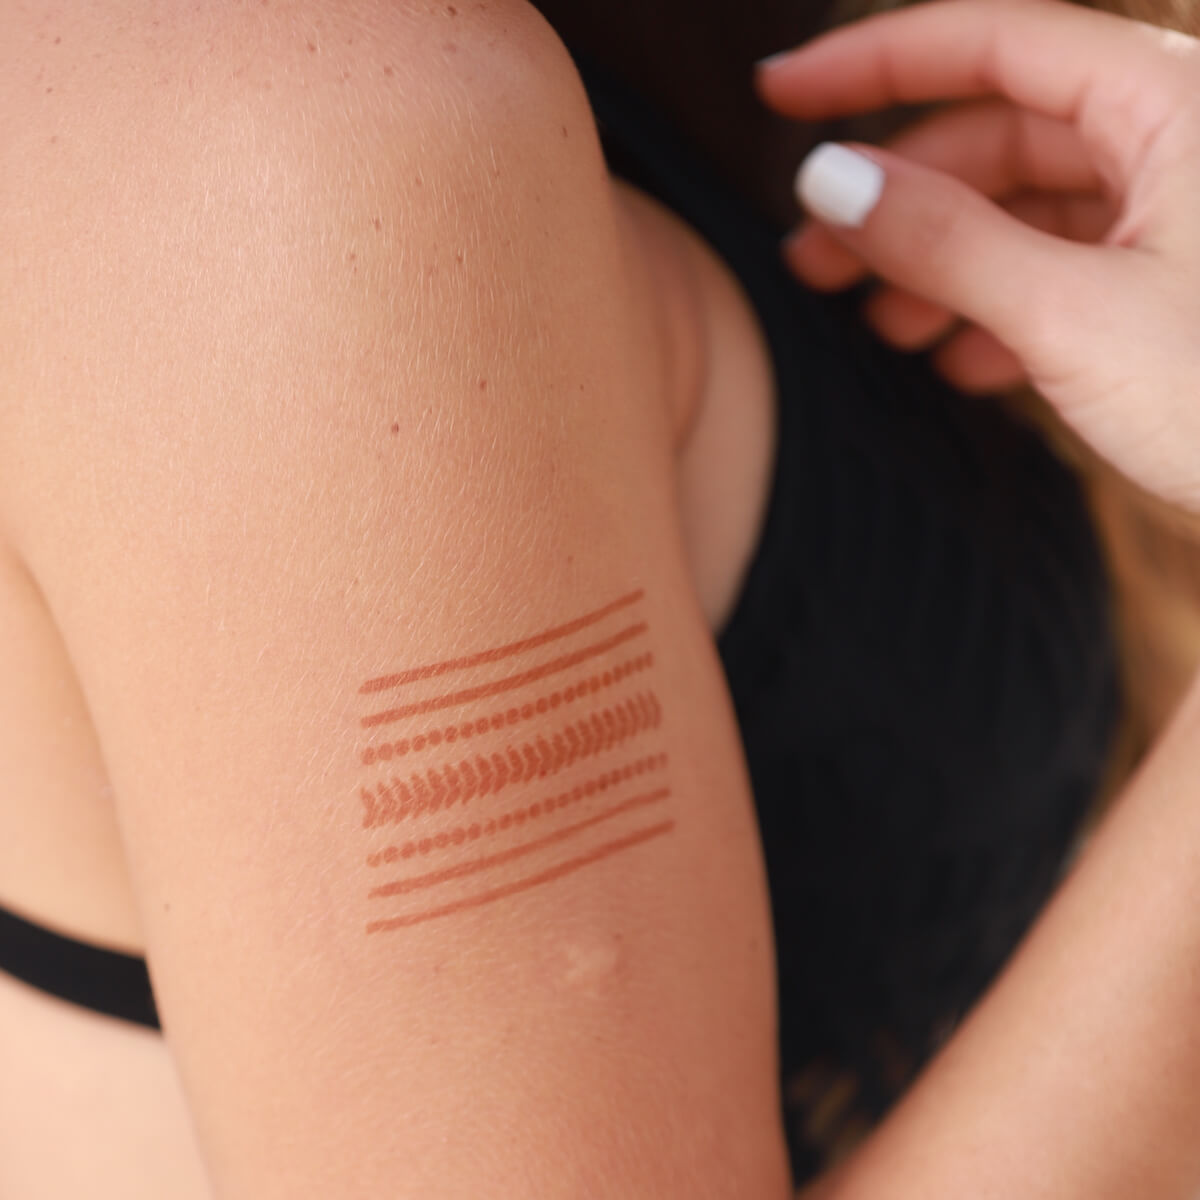 Miami - geometric henna design on upper arm